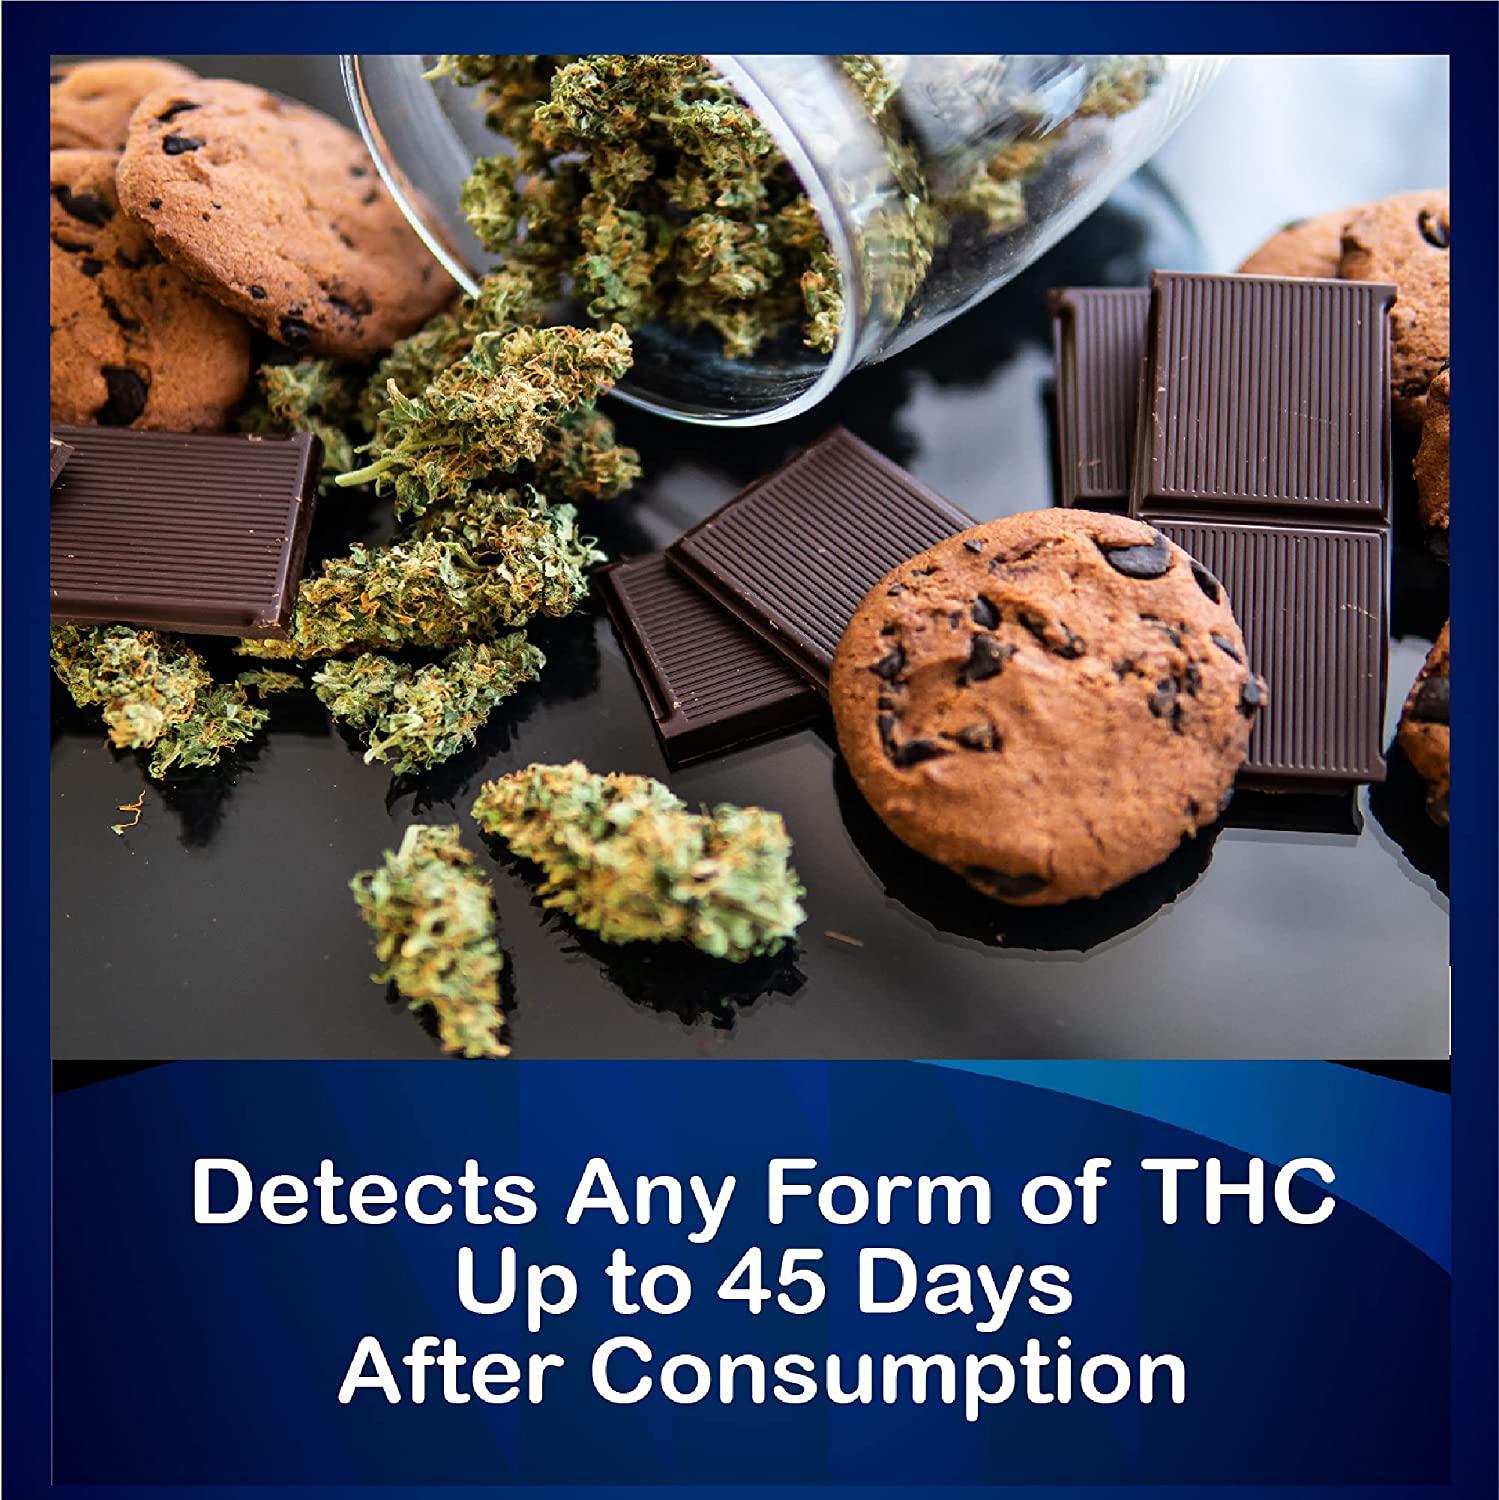 10 Pack - DrugExam Highly Sensitive Marijuana THC 20 ng/mL Single Panel Drug  Test Kit - Marijuana Drug Test with 20 ng/mL Cutoff Level for Detecting Any  Form of THC in Urine